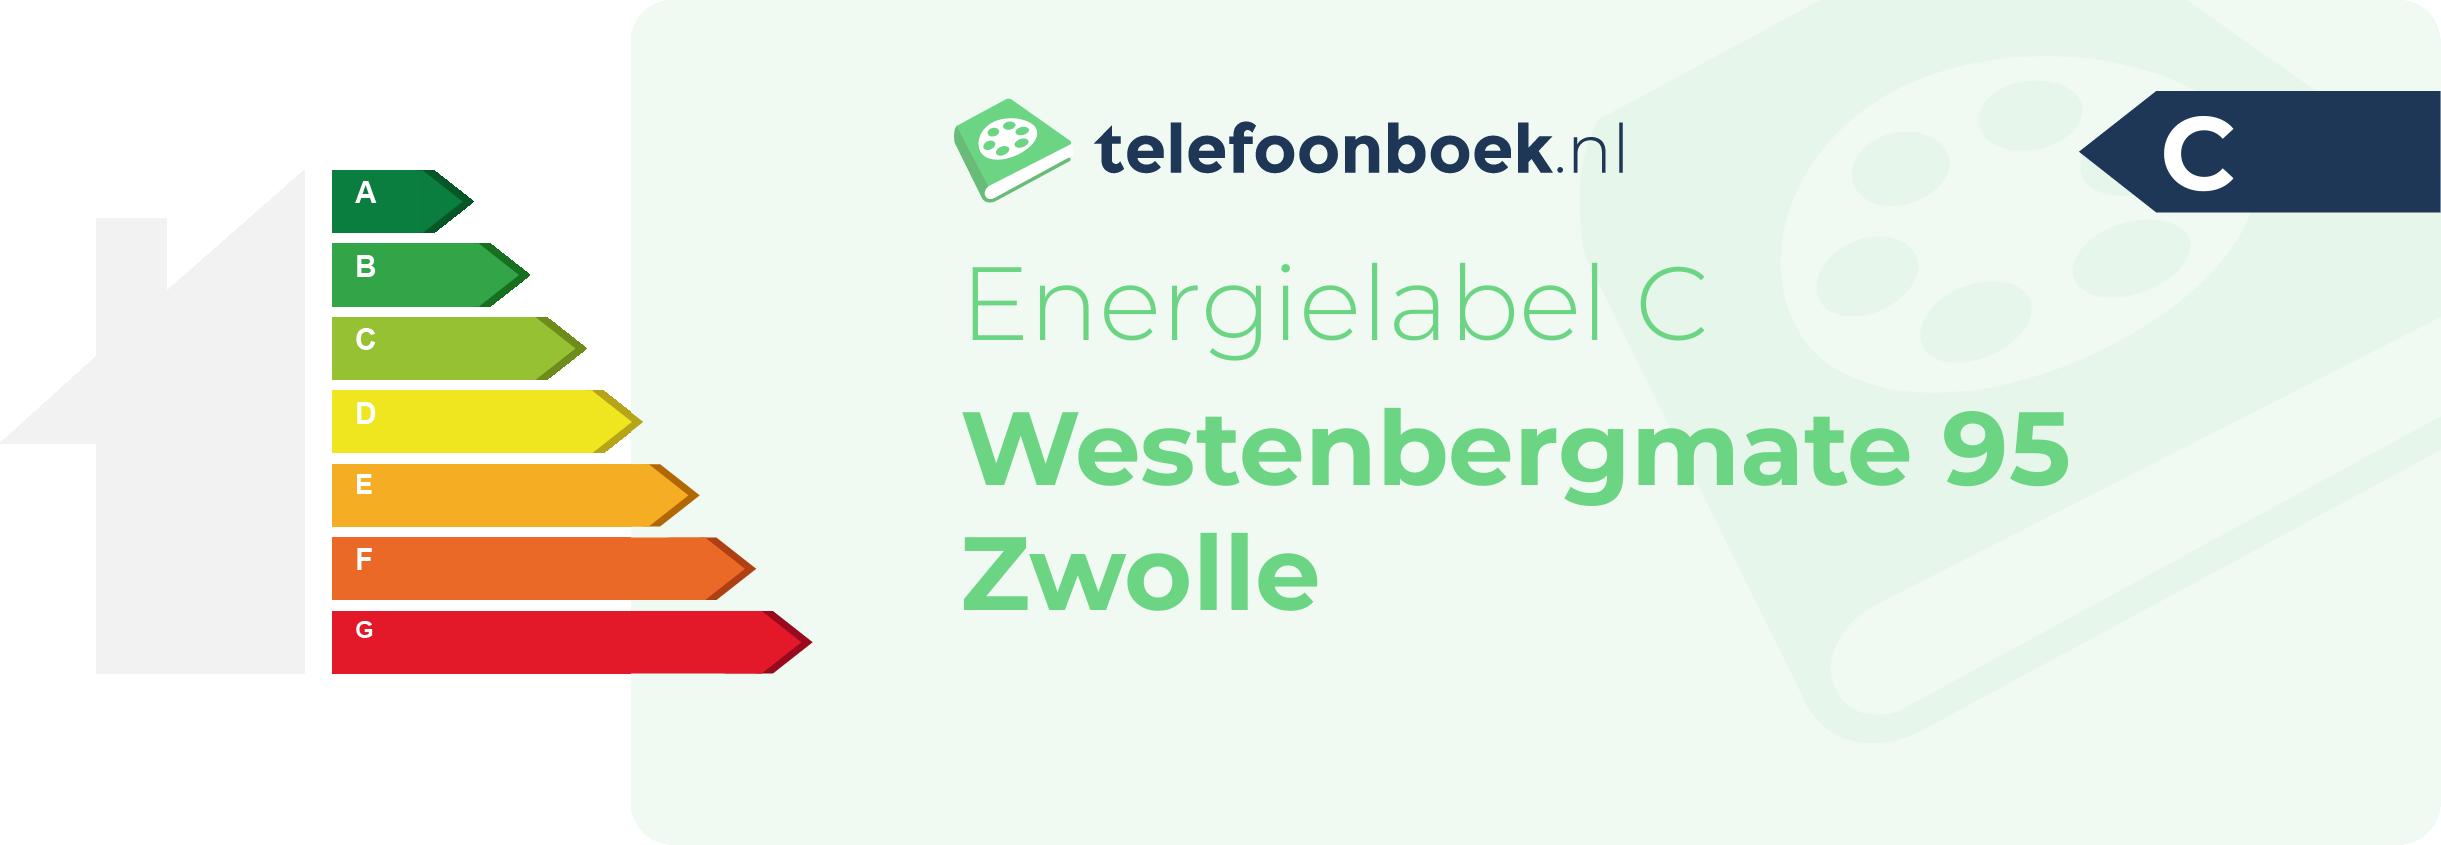 Energielabel Westenbergmate 95 Zwolle